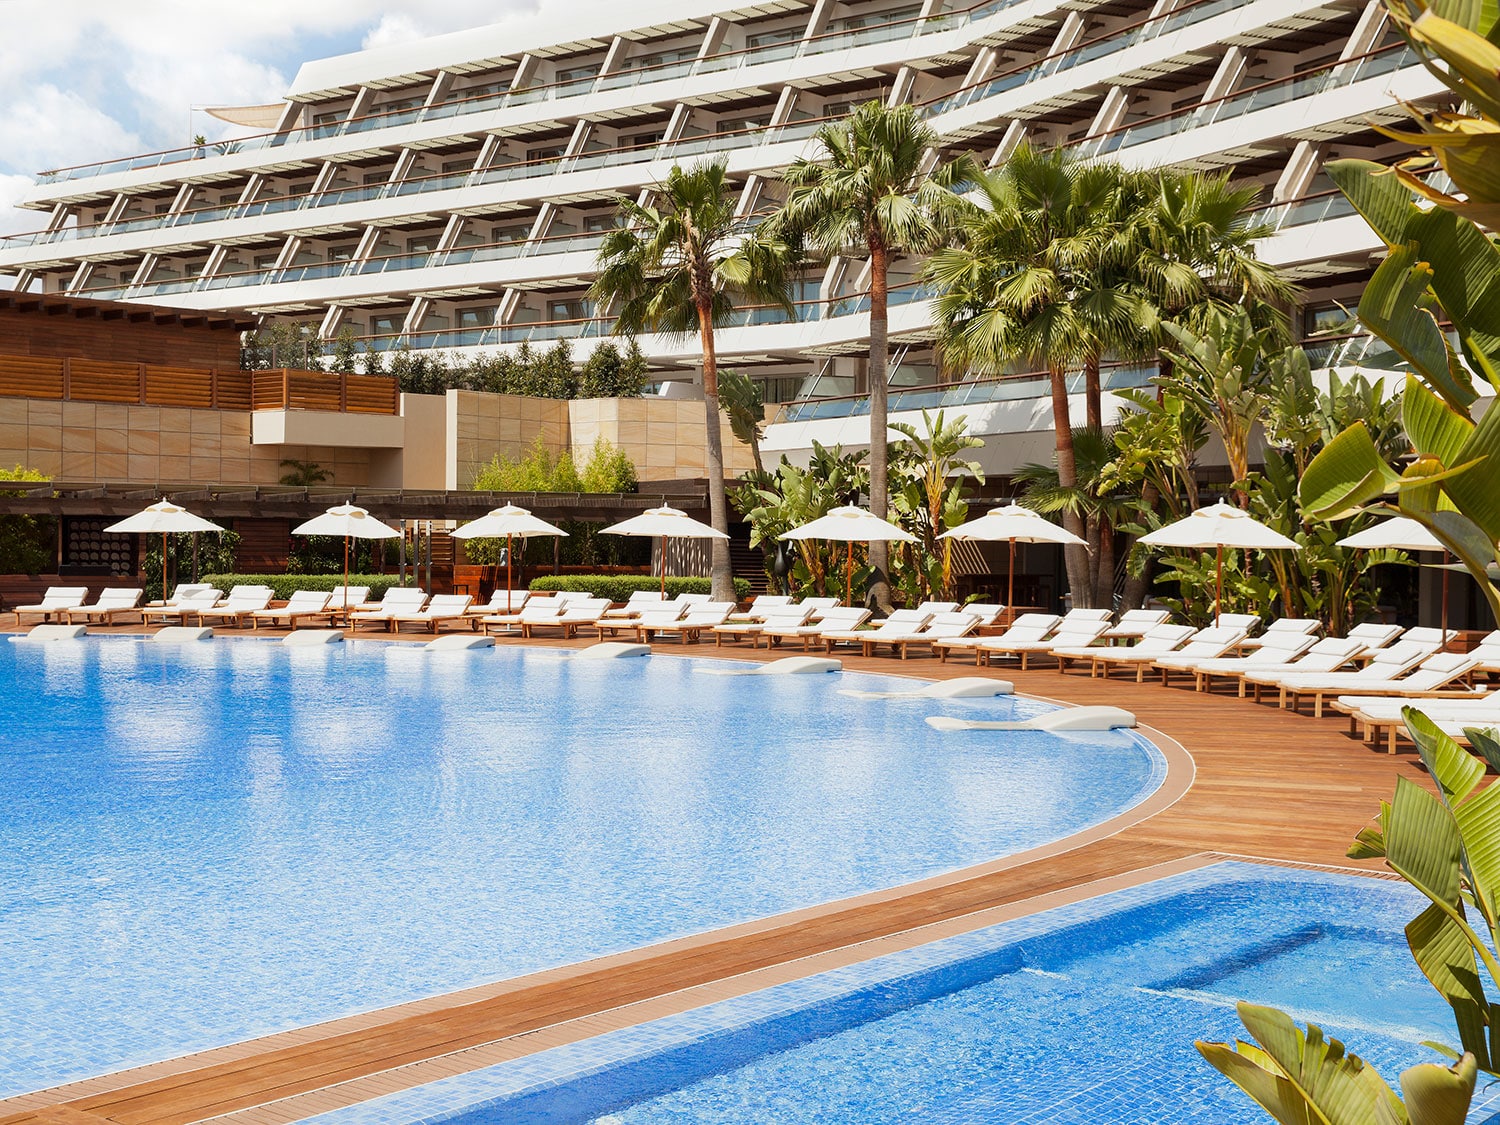 The pool at Ibiza Gran Hotel in Spain's Balearic Islands.